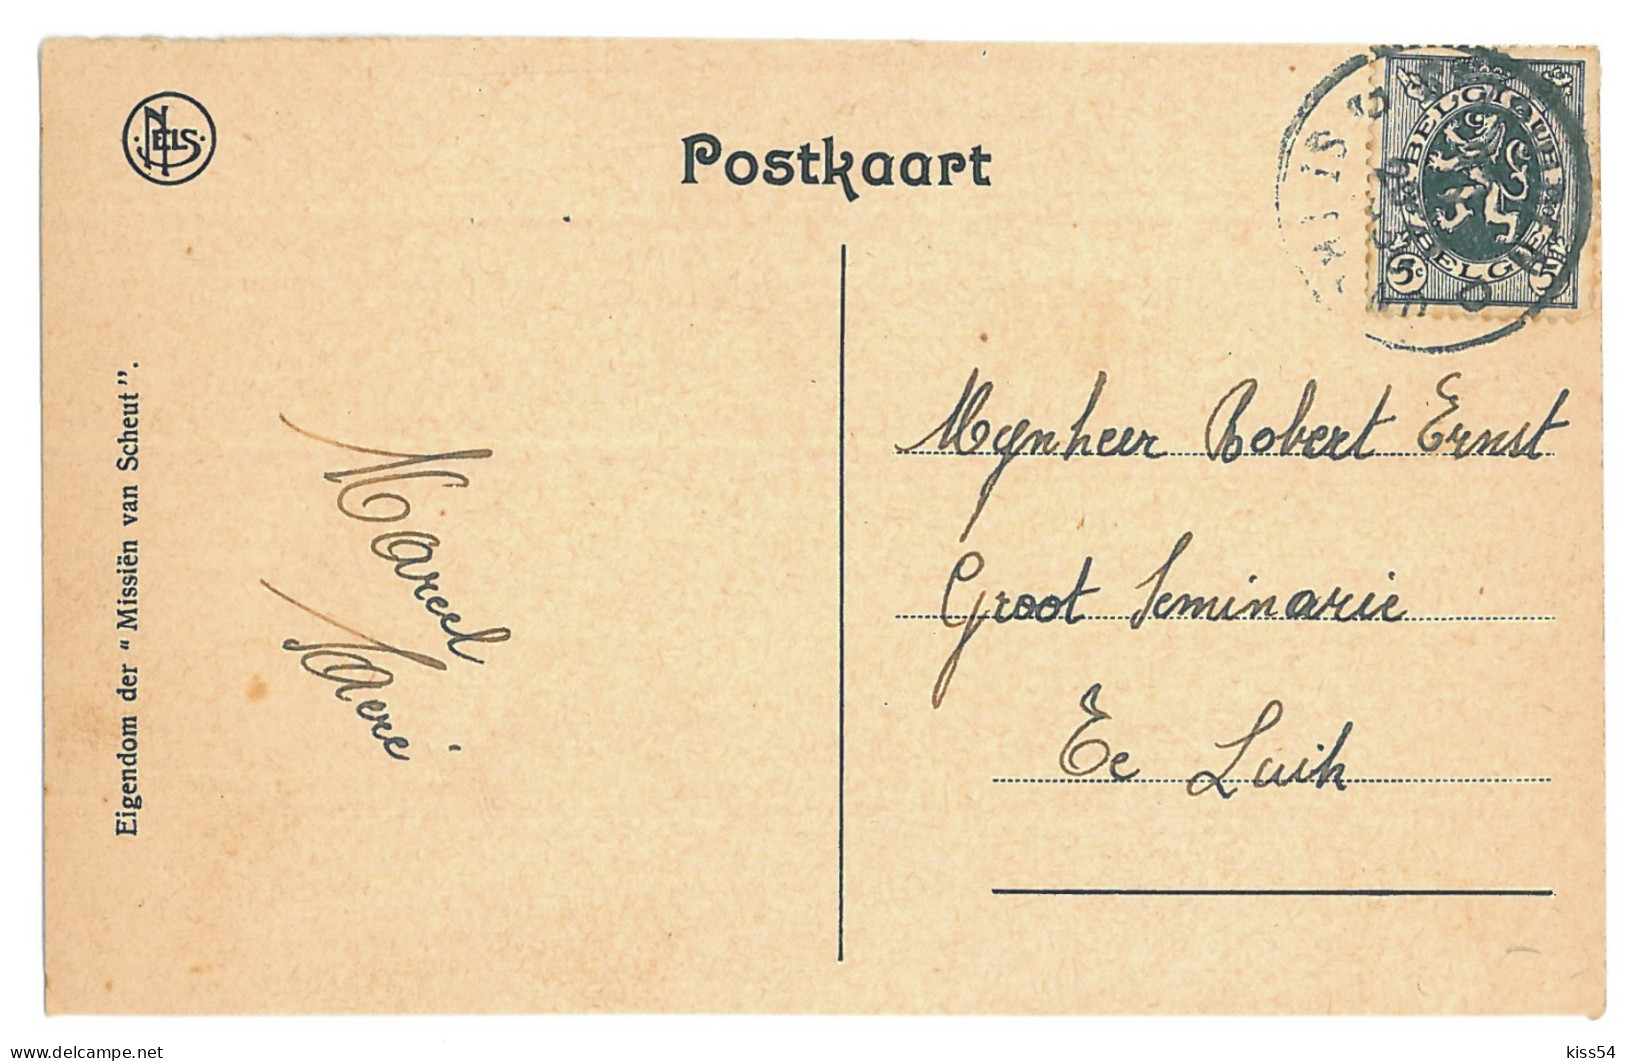 PH 1 - 12085 ETHNICS Women, Philippines - Old Postcard - Used - 1913 - Philippines